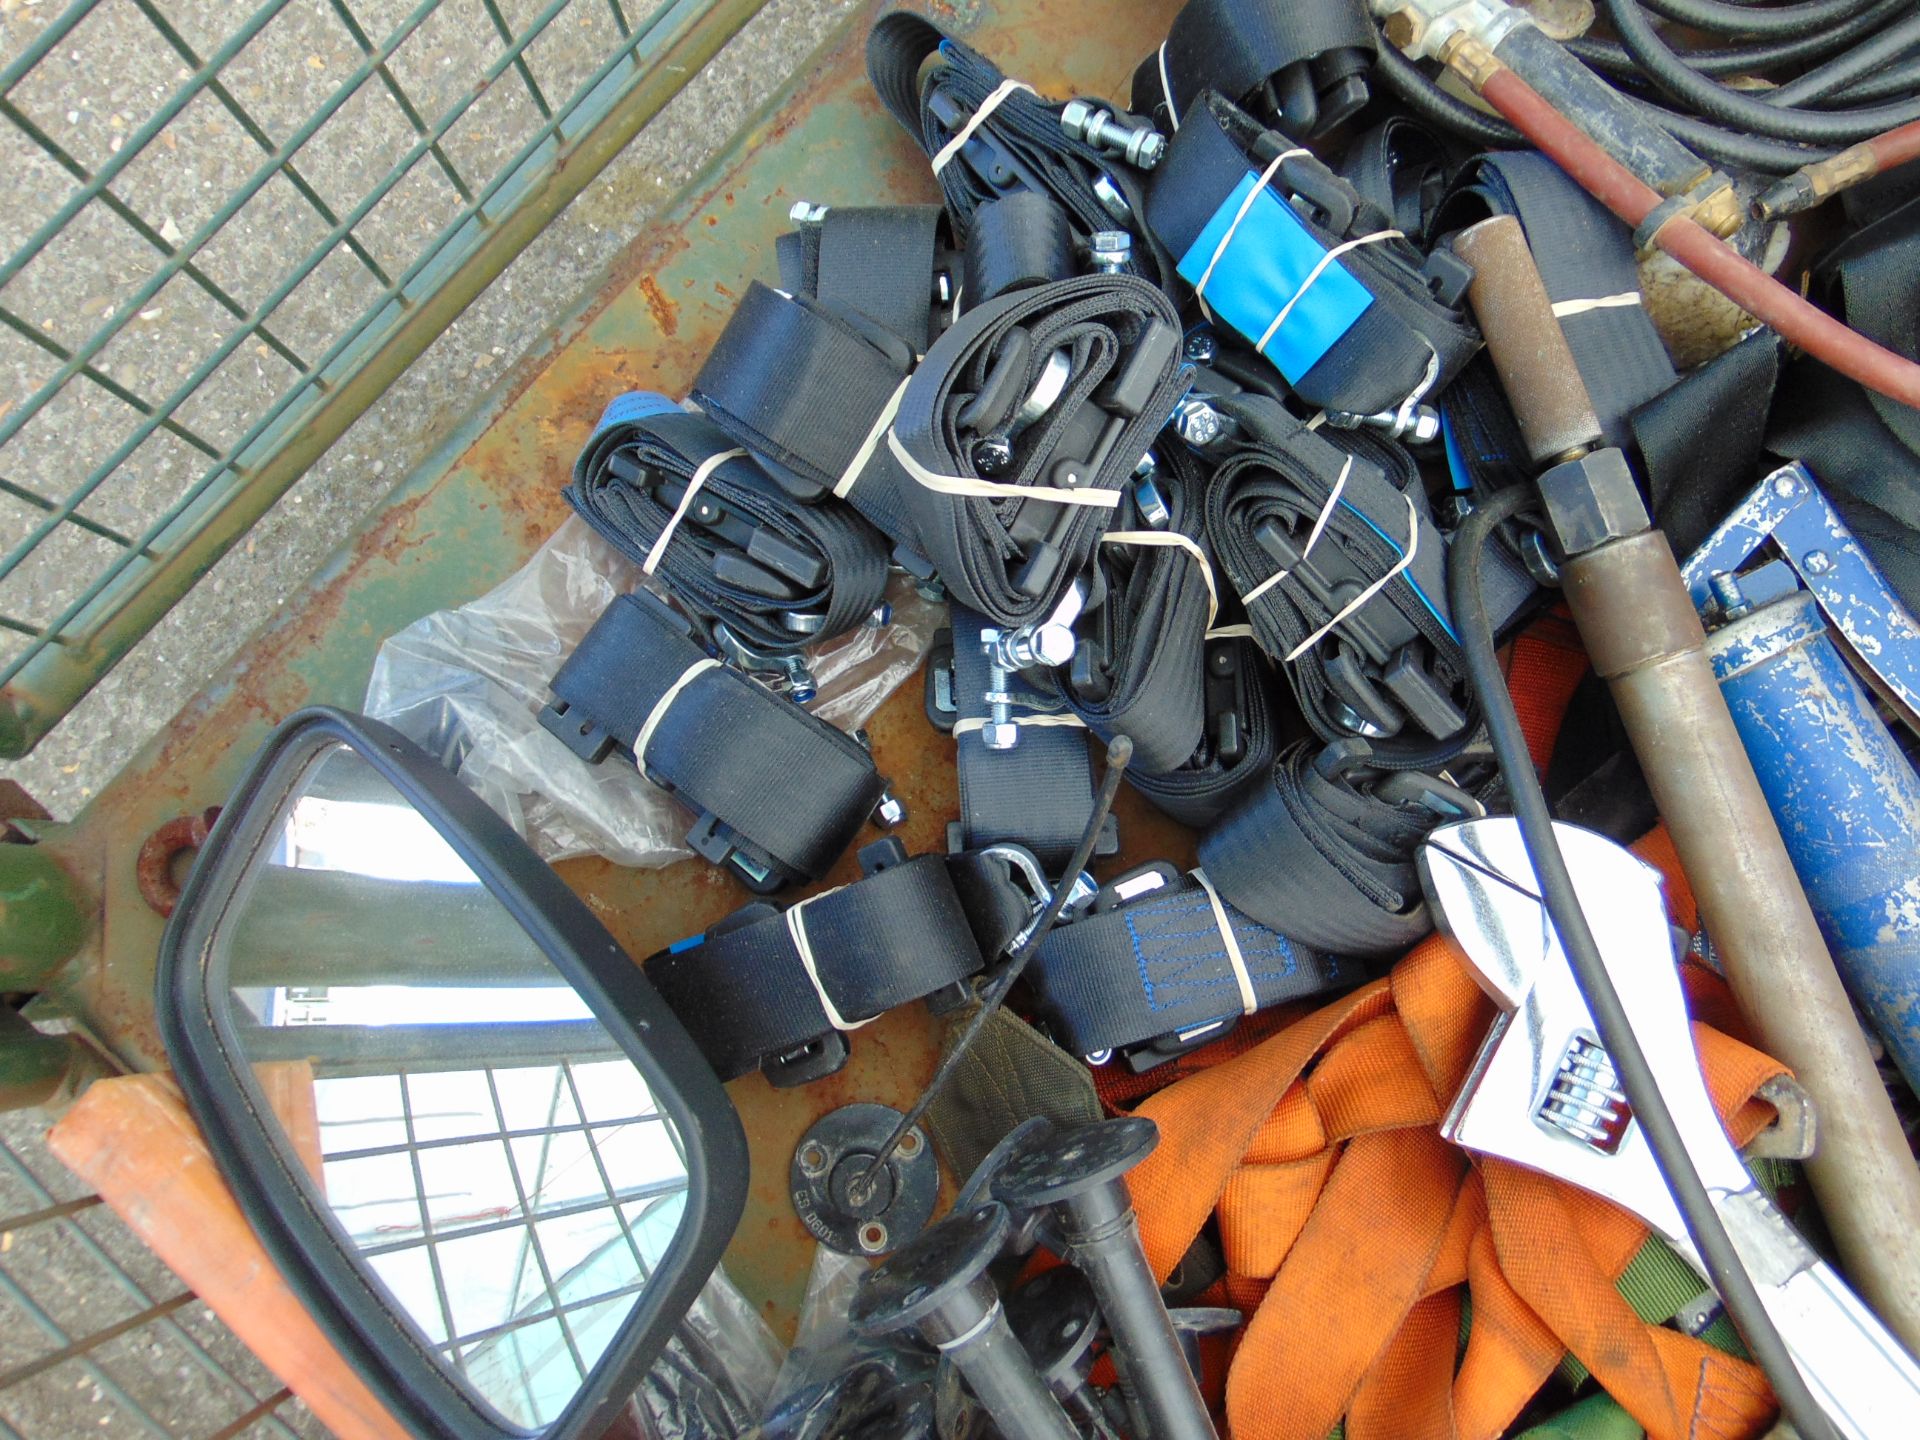 Antennas, Seat Belts, Tools, Pegs, AFV Spot Light etc - Image 2 of 7